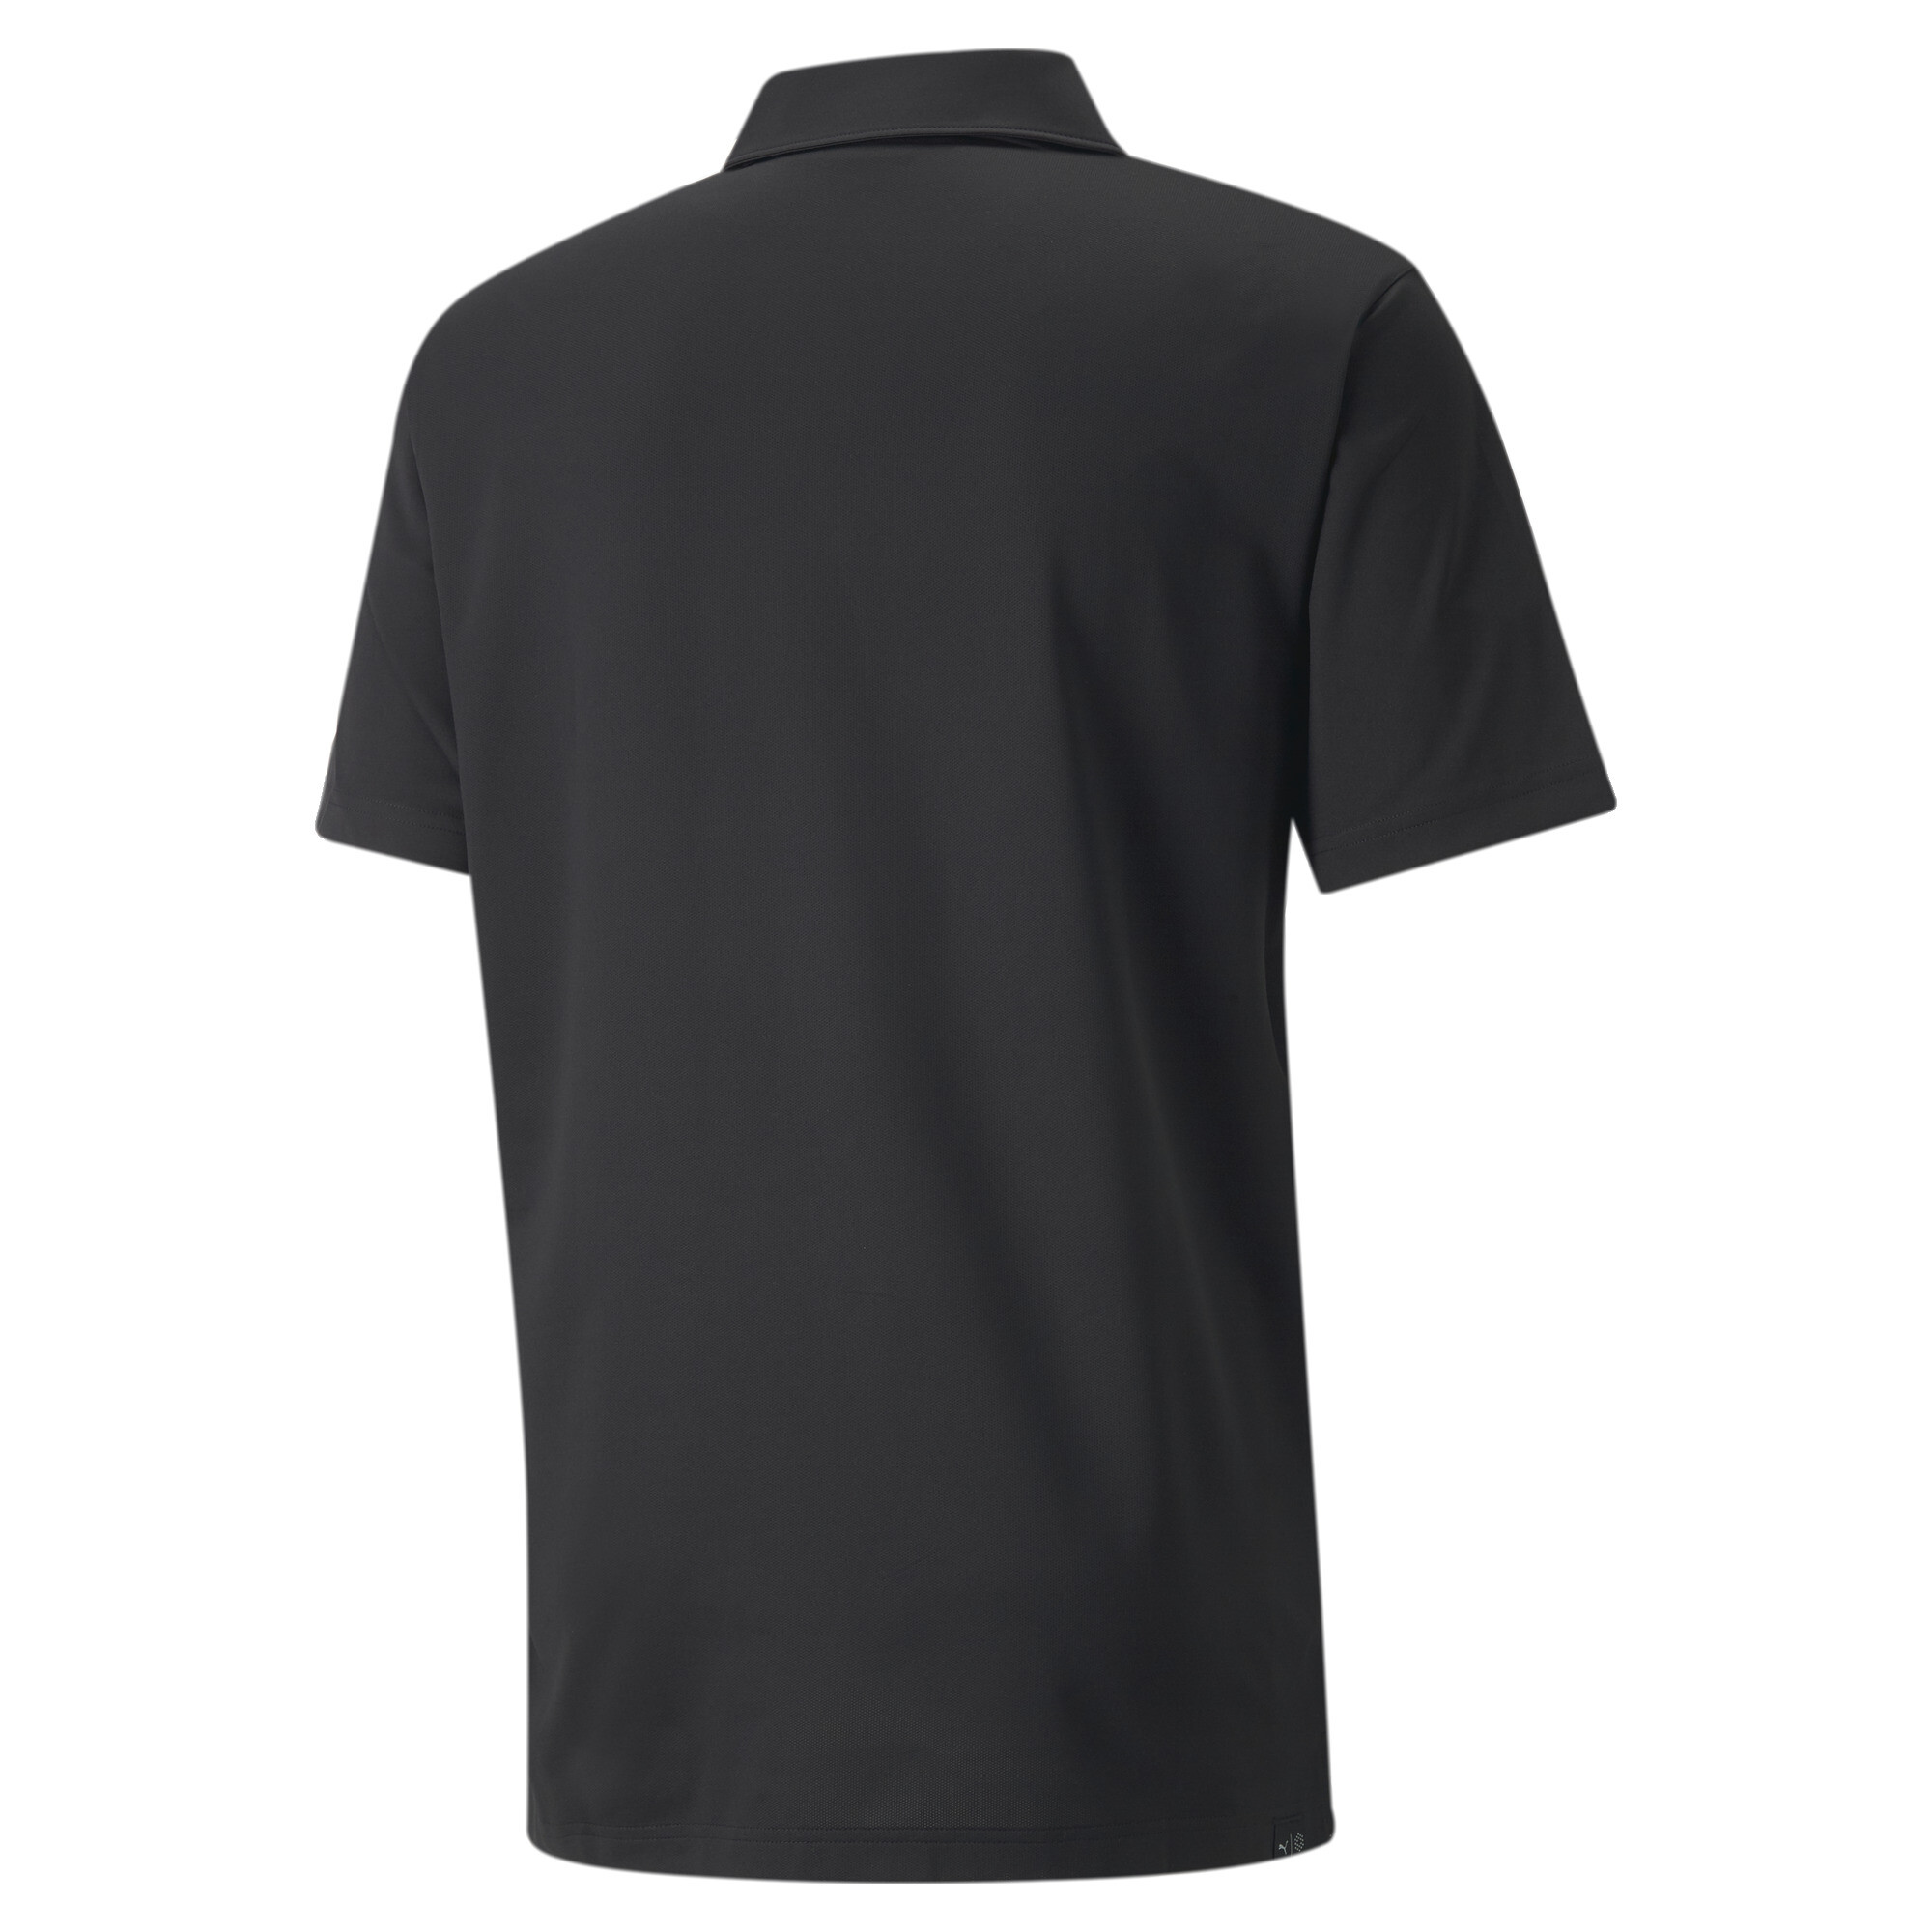 Men's Puma Gamer's Golf Polo Shirt T-Shirt, Black T-Shirt, Size L T-Shirt, Clothing